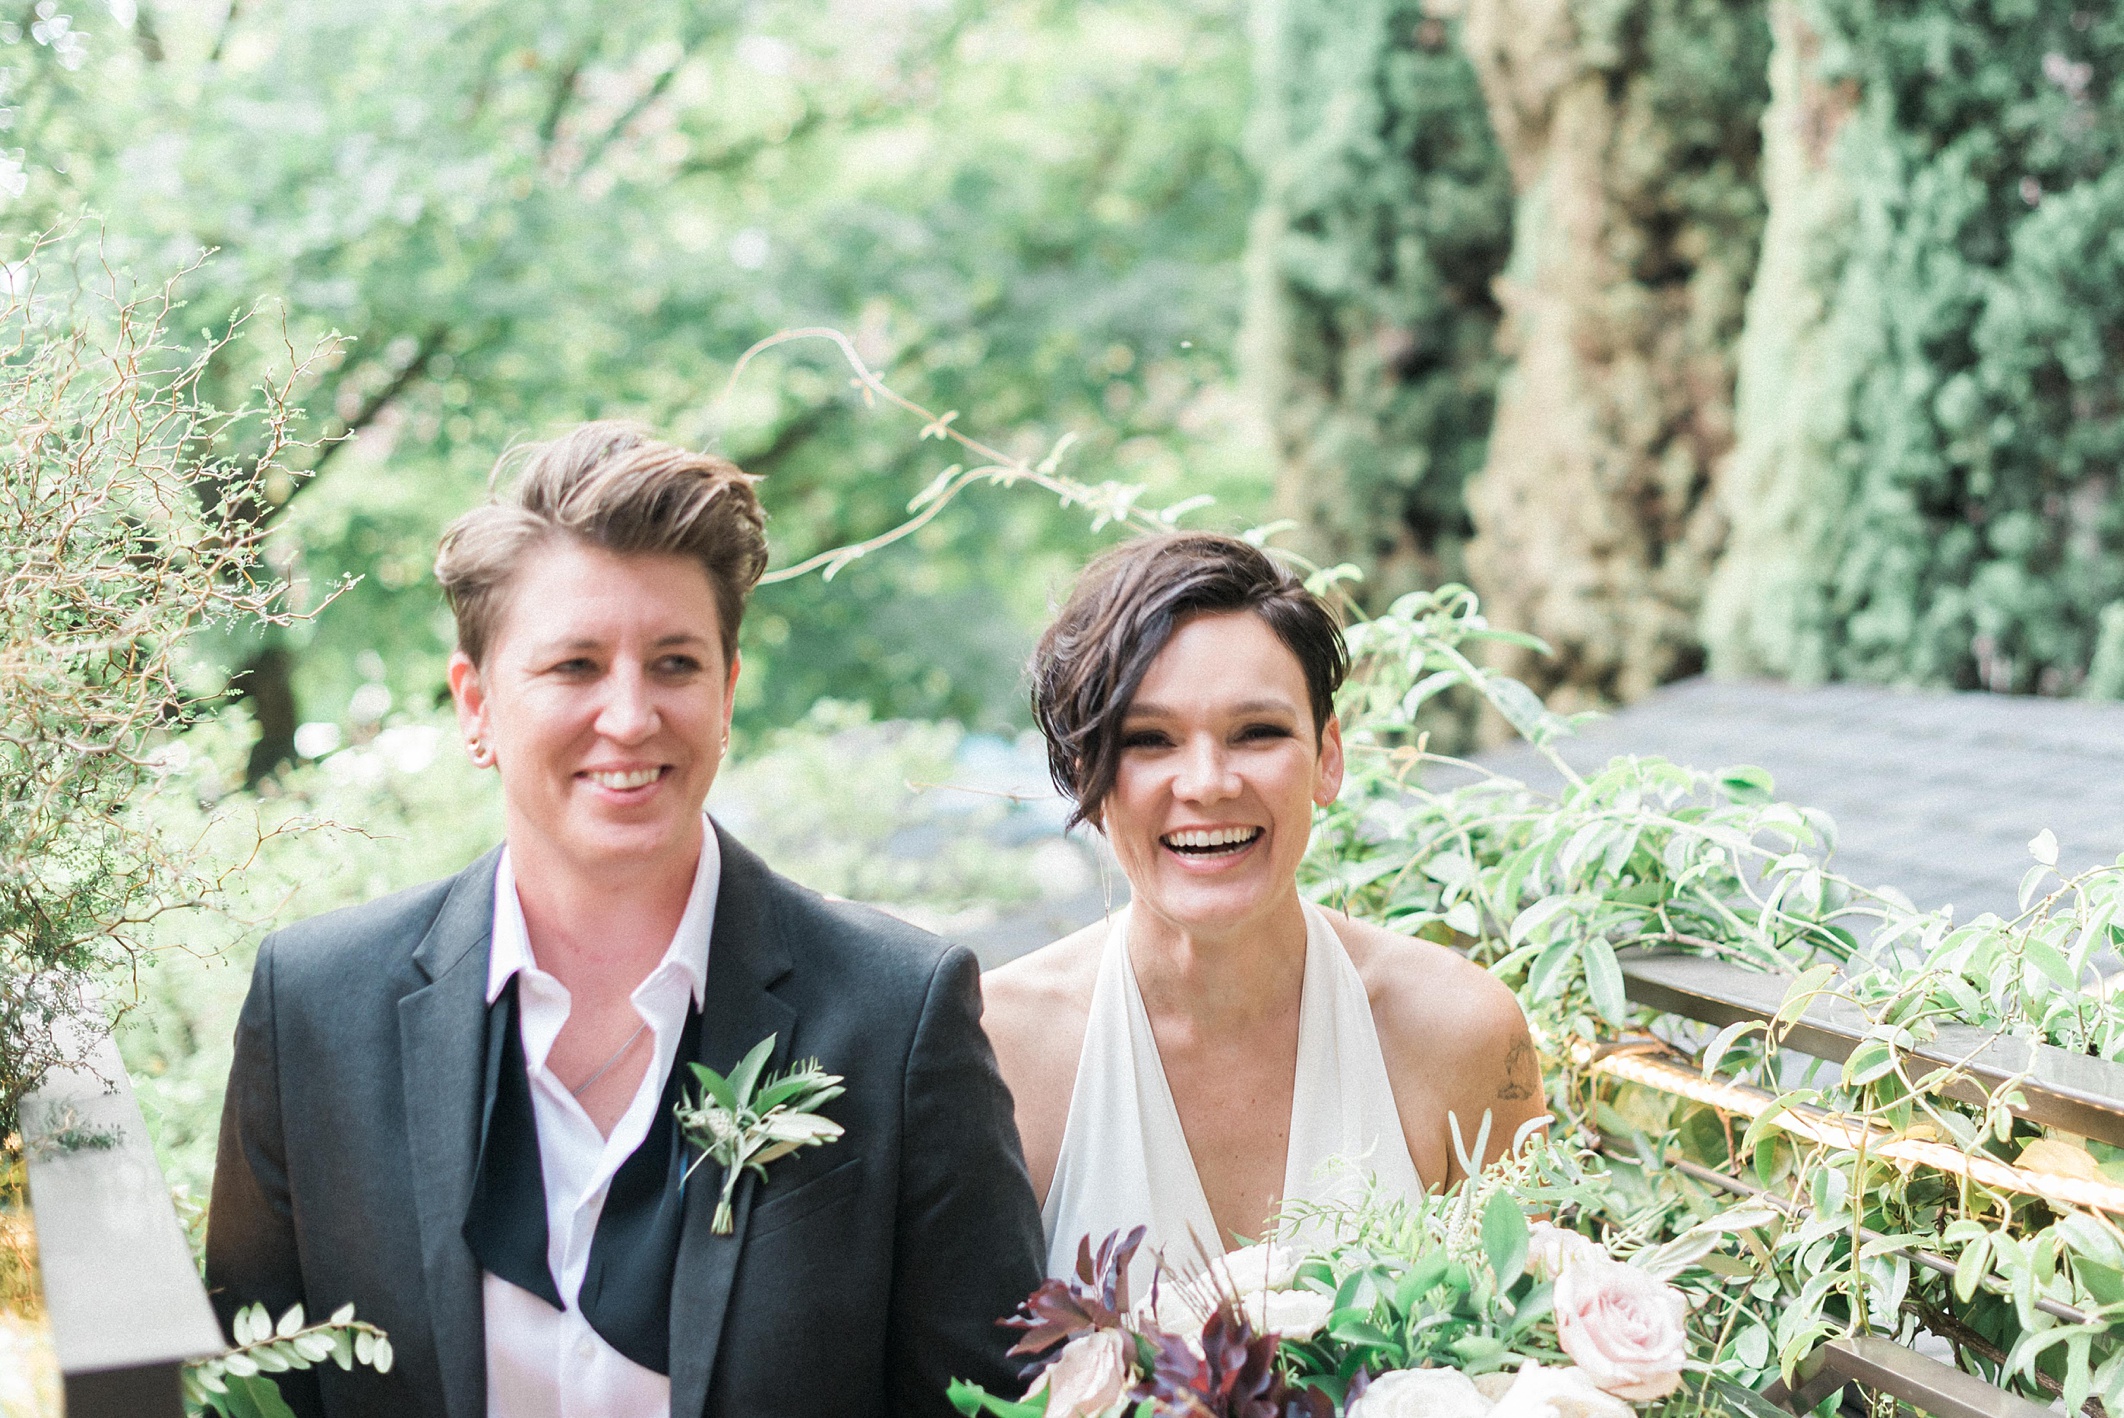 Lesbian Industrial chic hipster wedding. Bloom by Tara. Seattle 